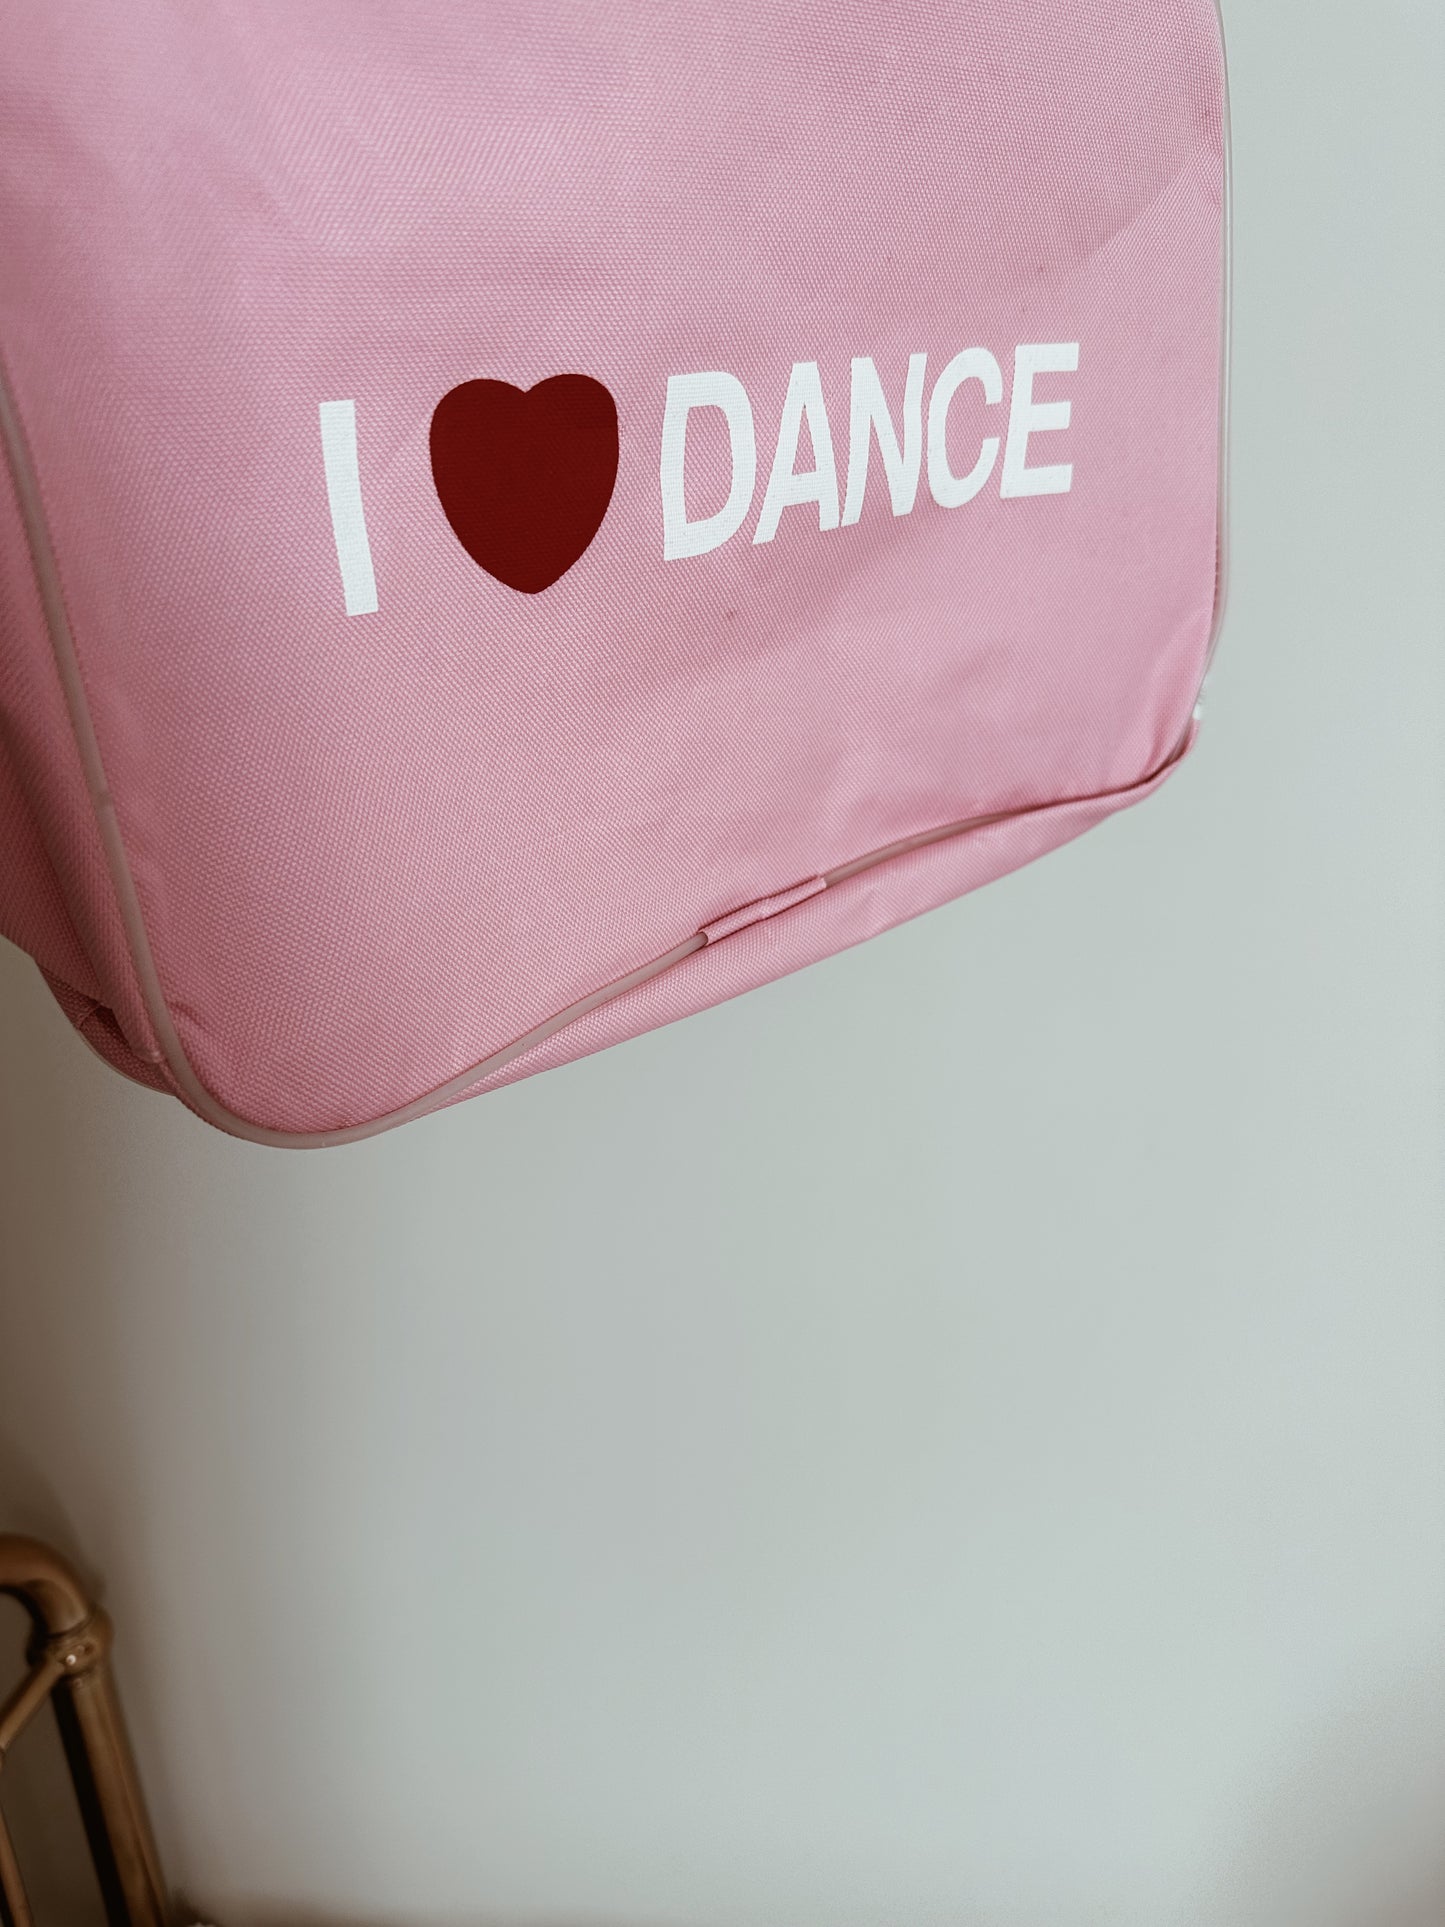 I LOVE DANCE ( Mini Dance Bag)